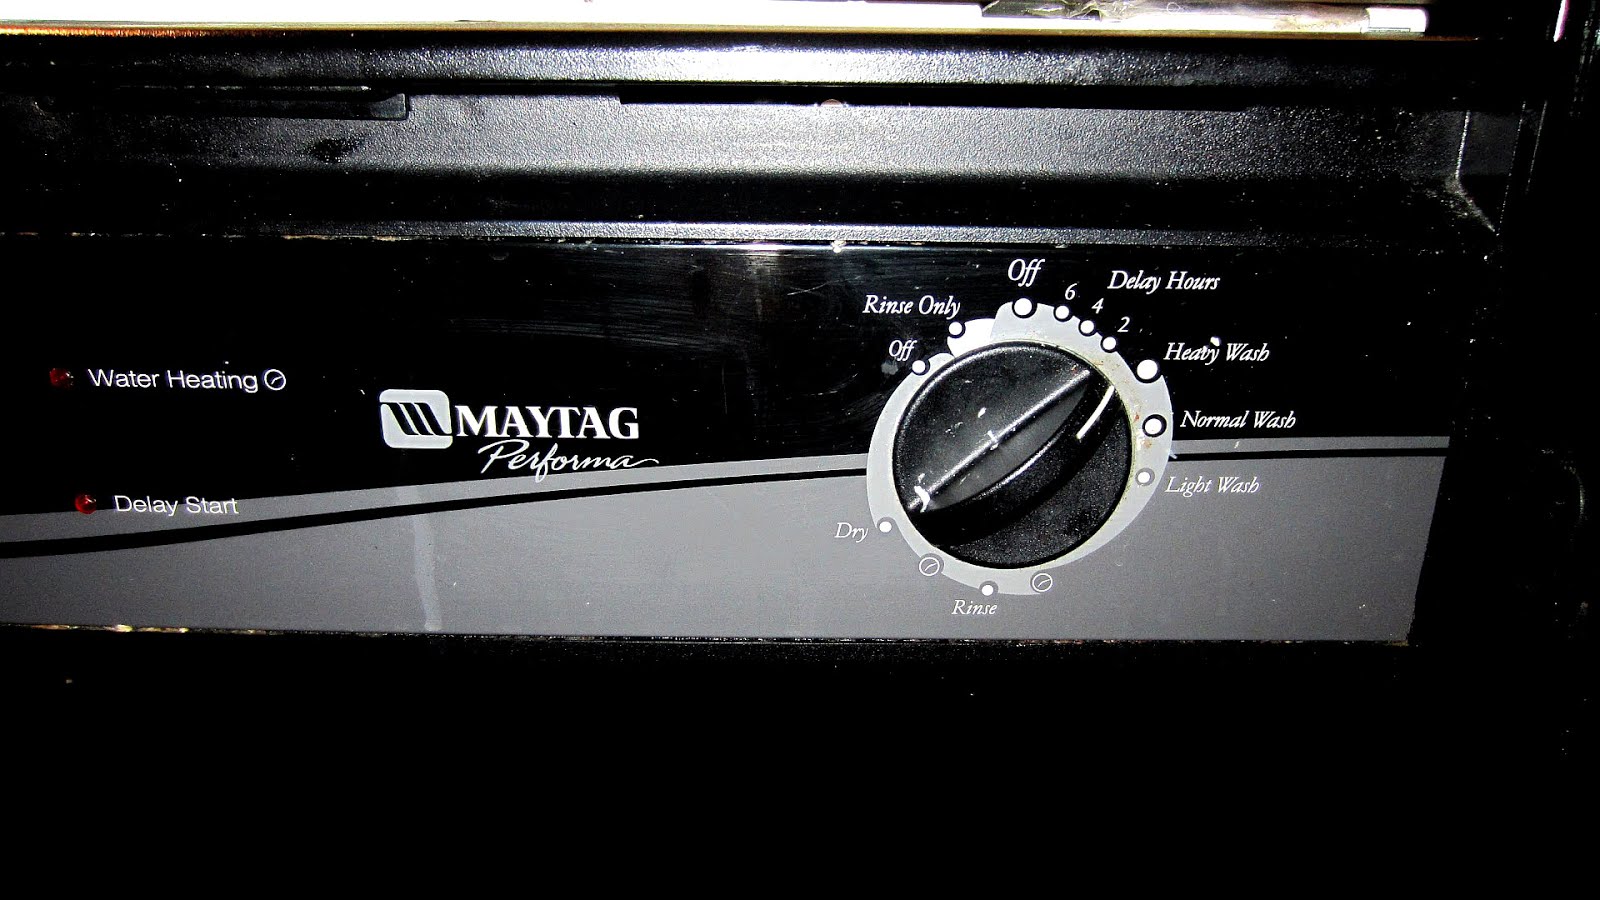 Maytag - Old Maytag Dishwasher - Dish Choices